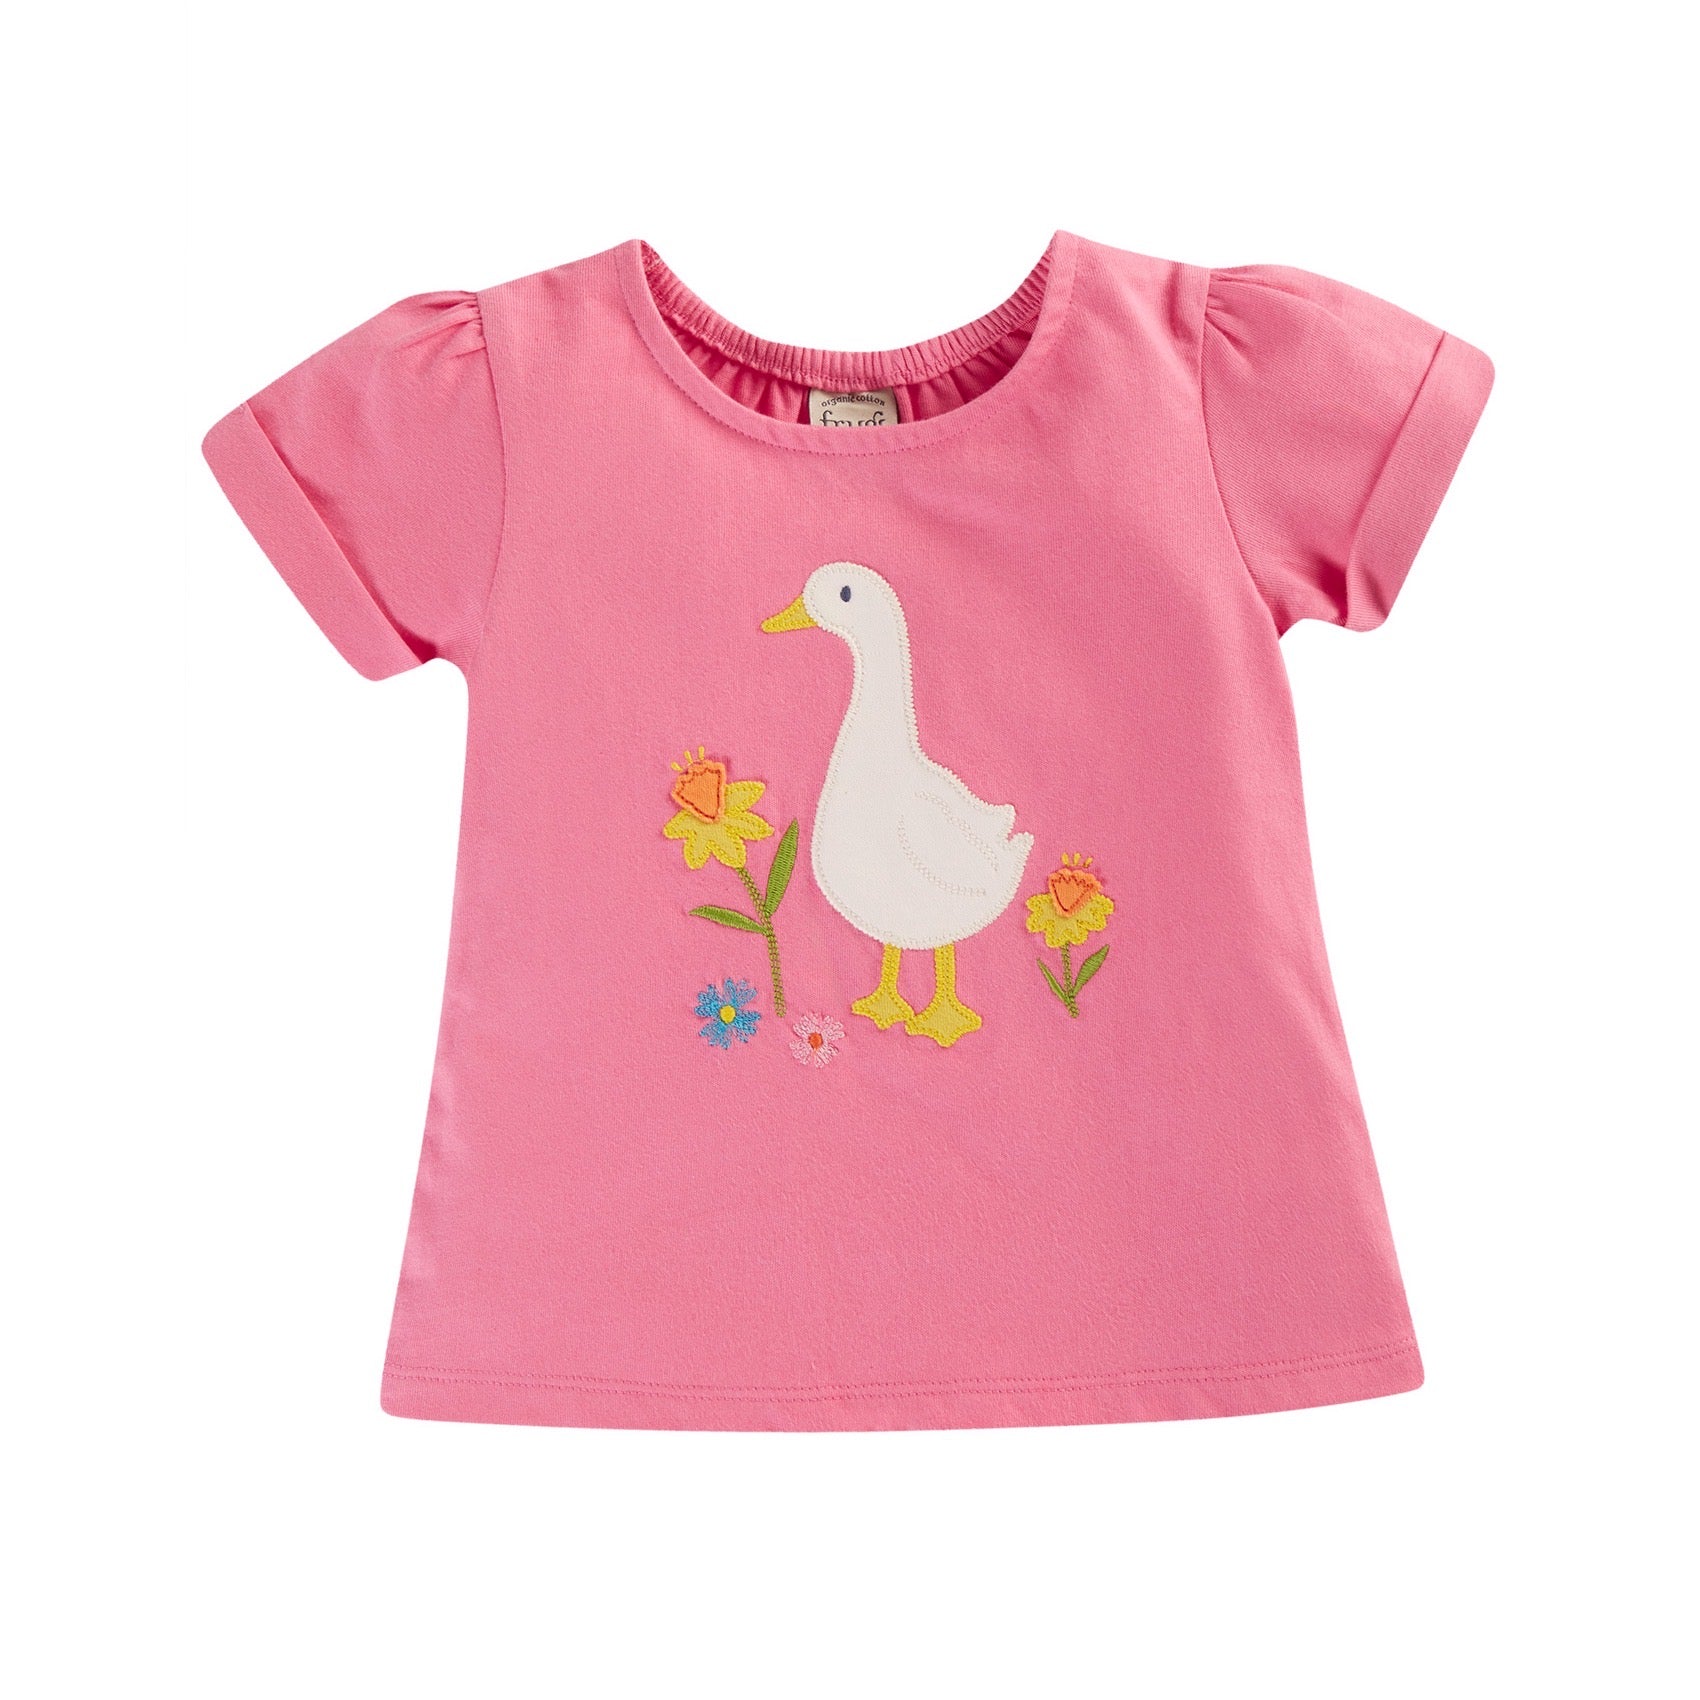 Frugi Eva Infant T-Shirt Pf4pi Pink Duck Clothing 3-6M / Pink,6-9M / Pink,9-12M / Pink,12-18M / Pink